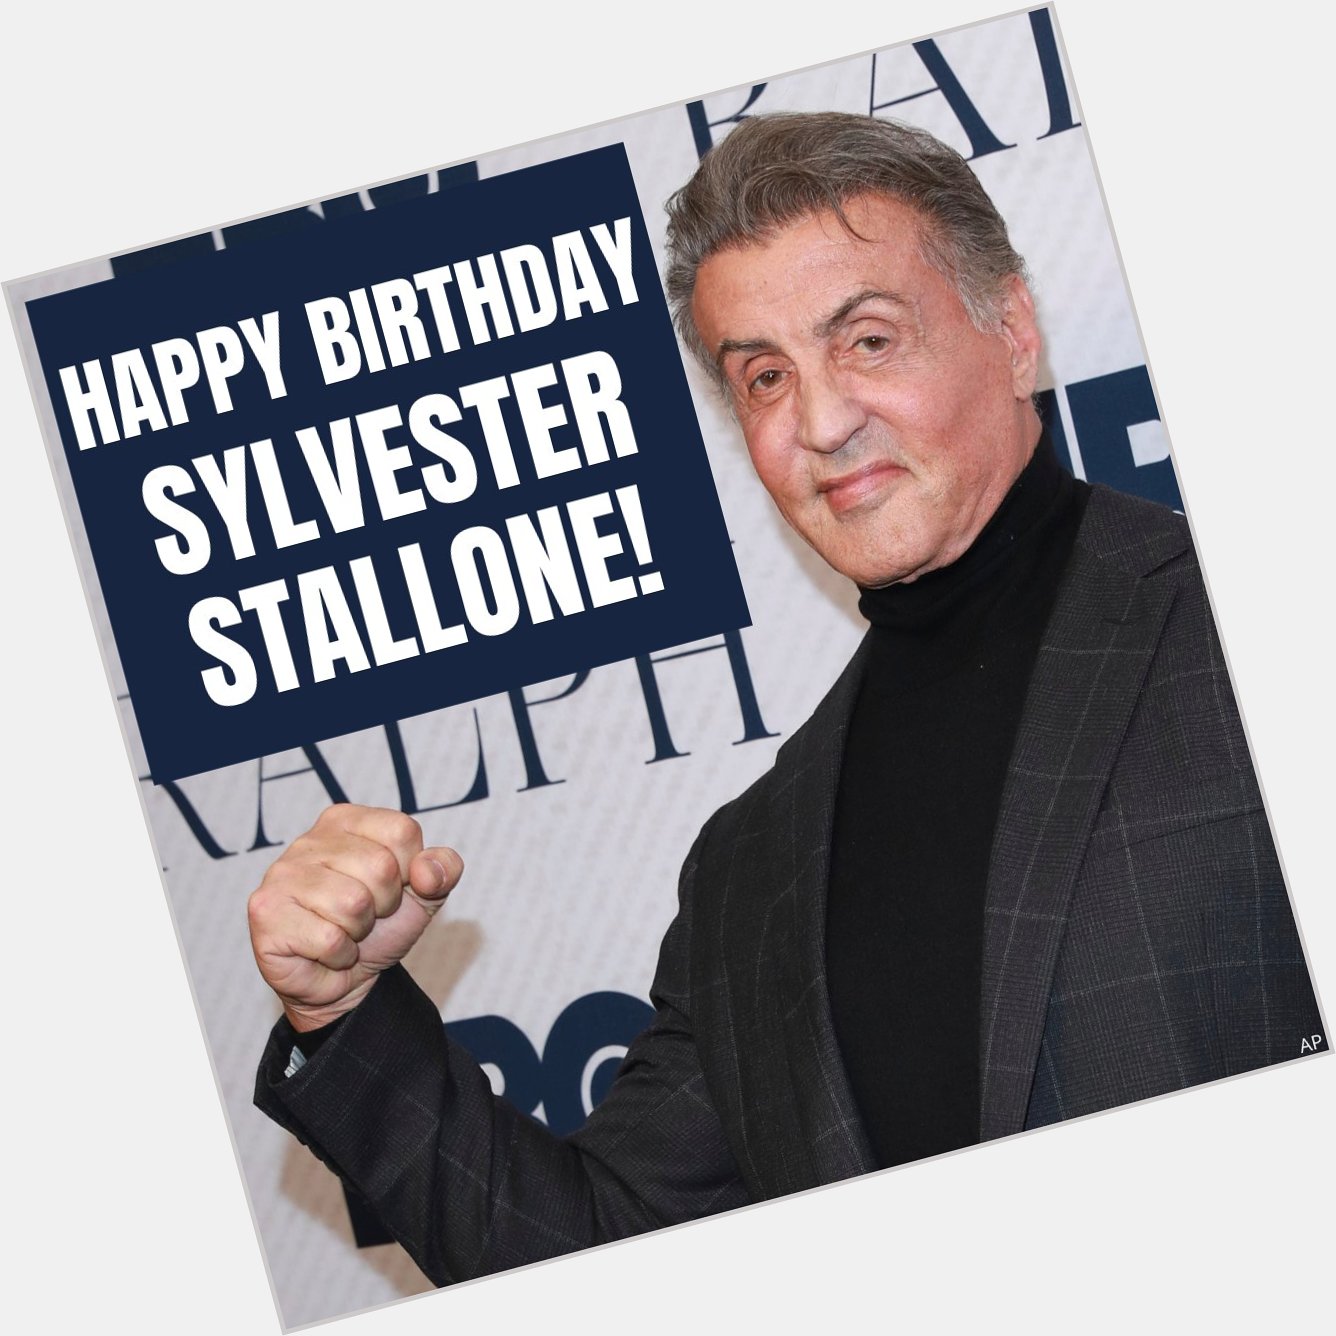 HAPPY BIRTHDAY!  Sylvester Stallone turns 74 today. 